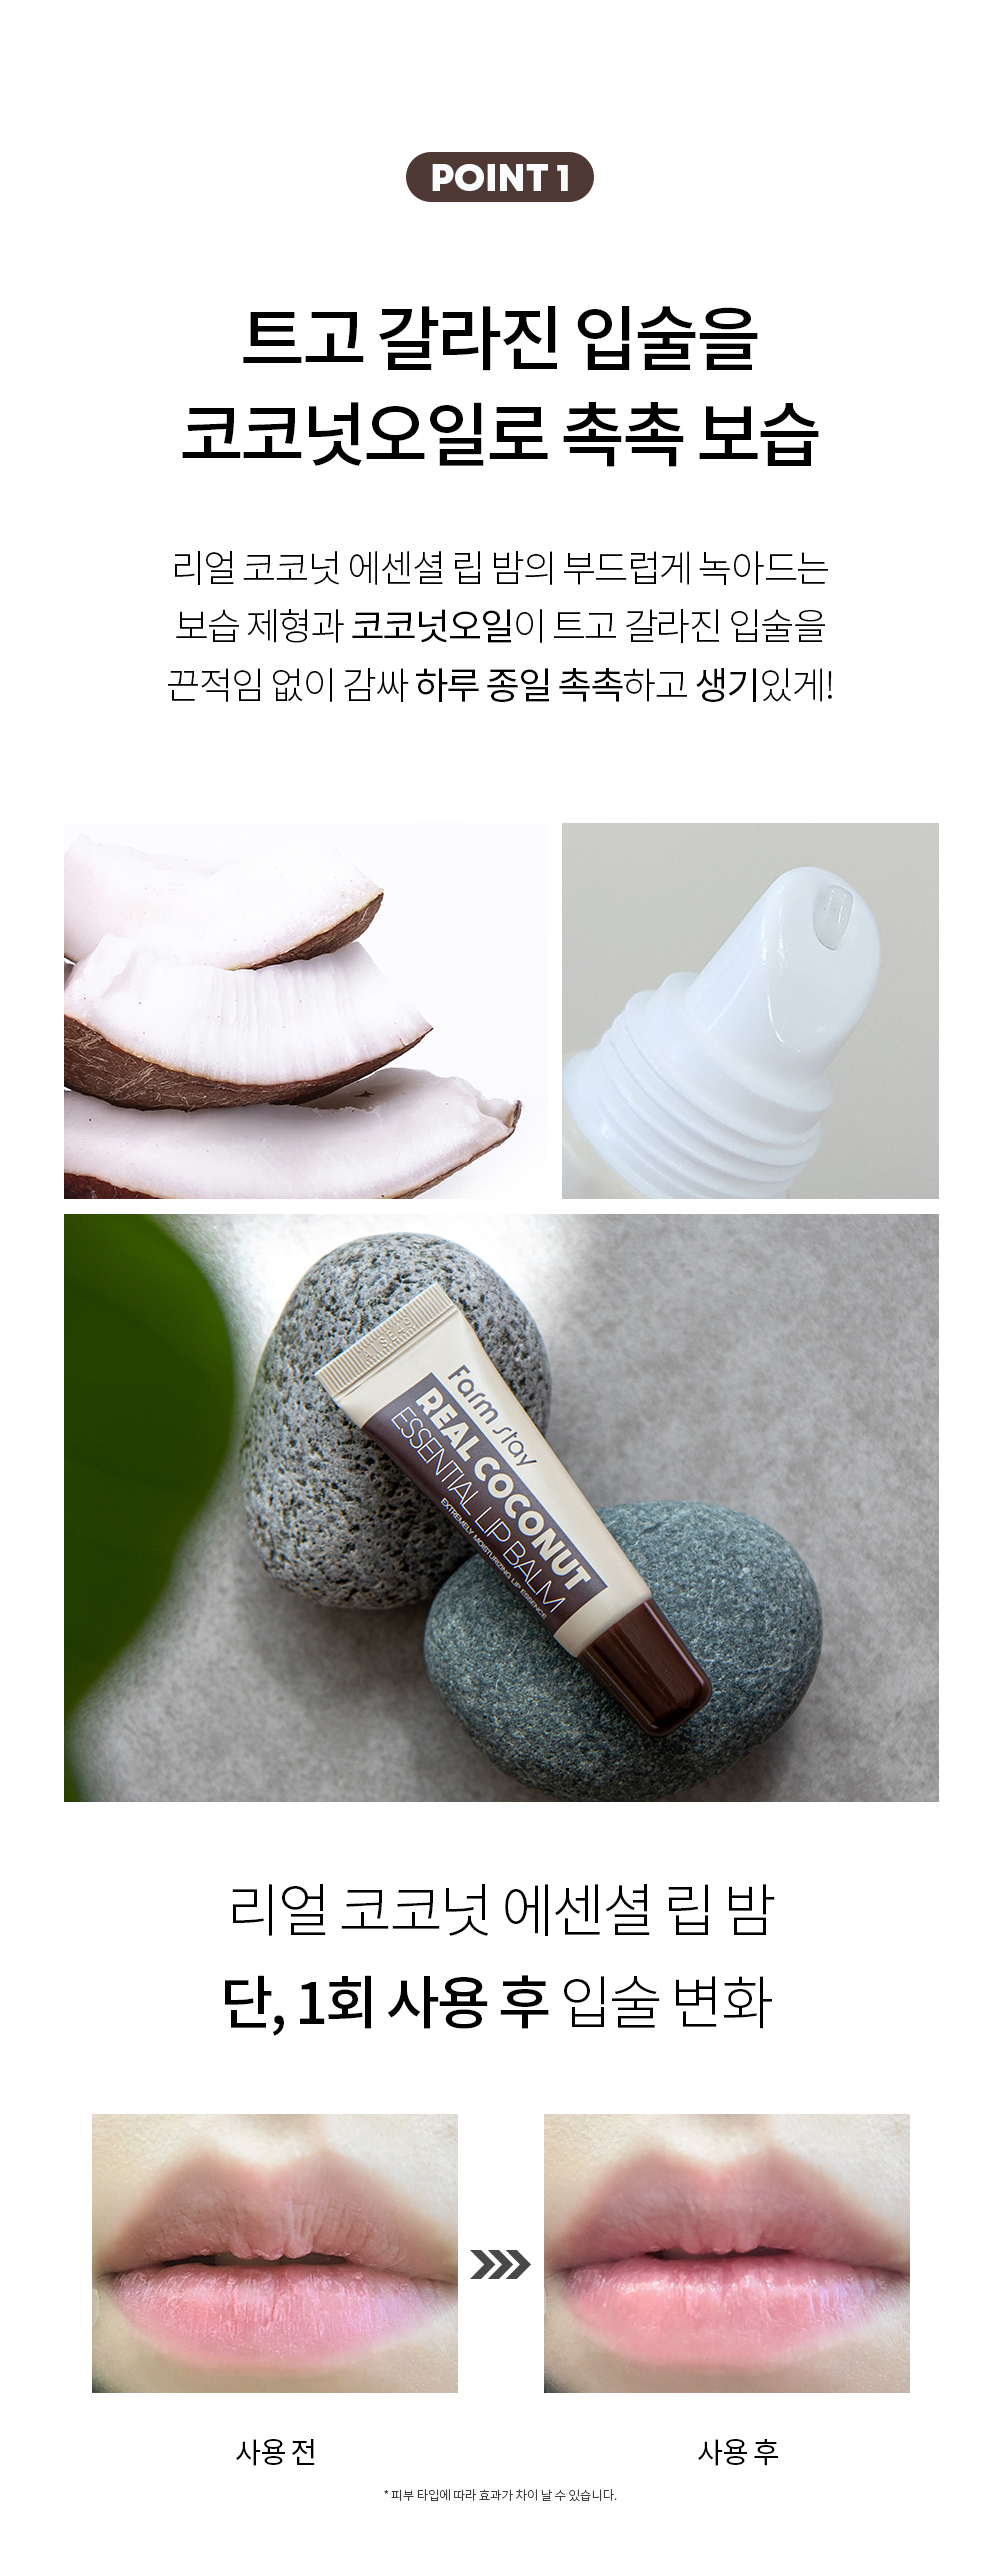 cosmetics product image-S8L4